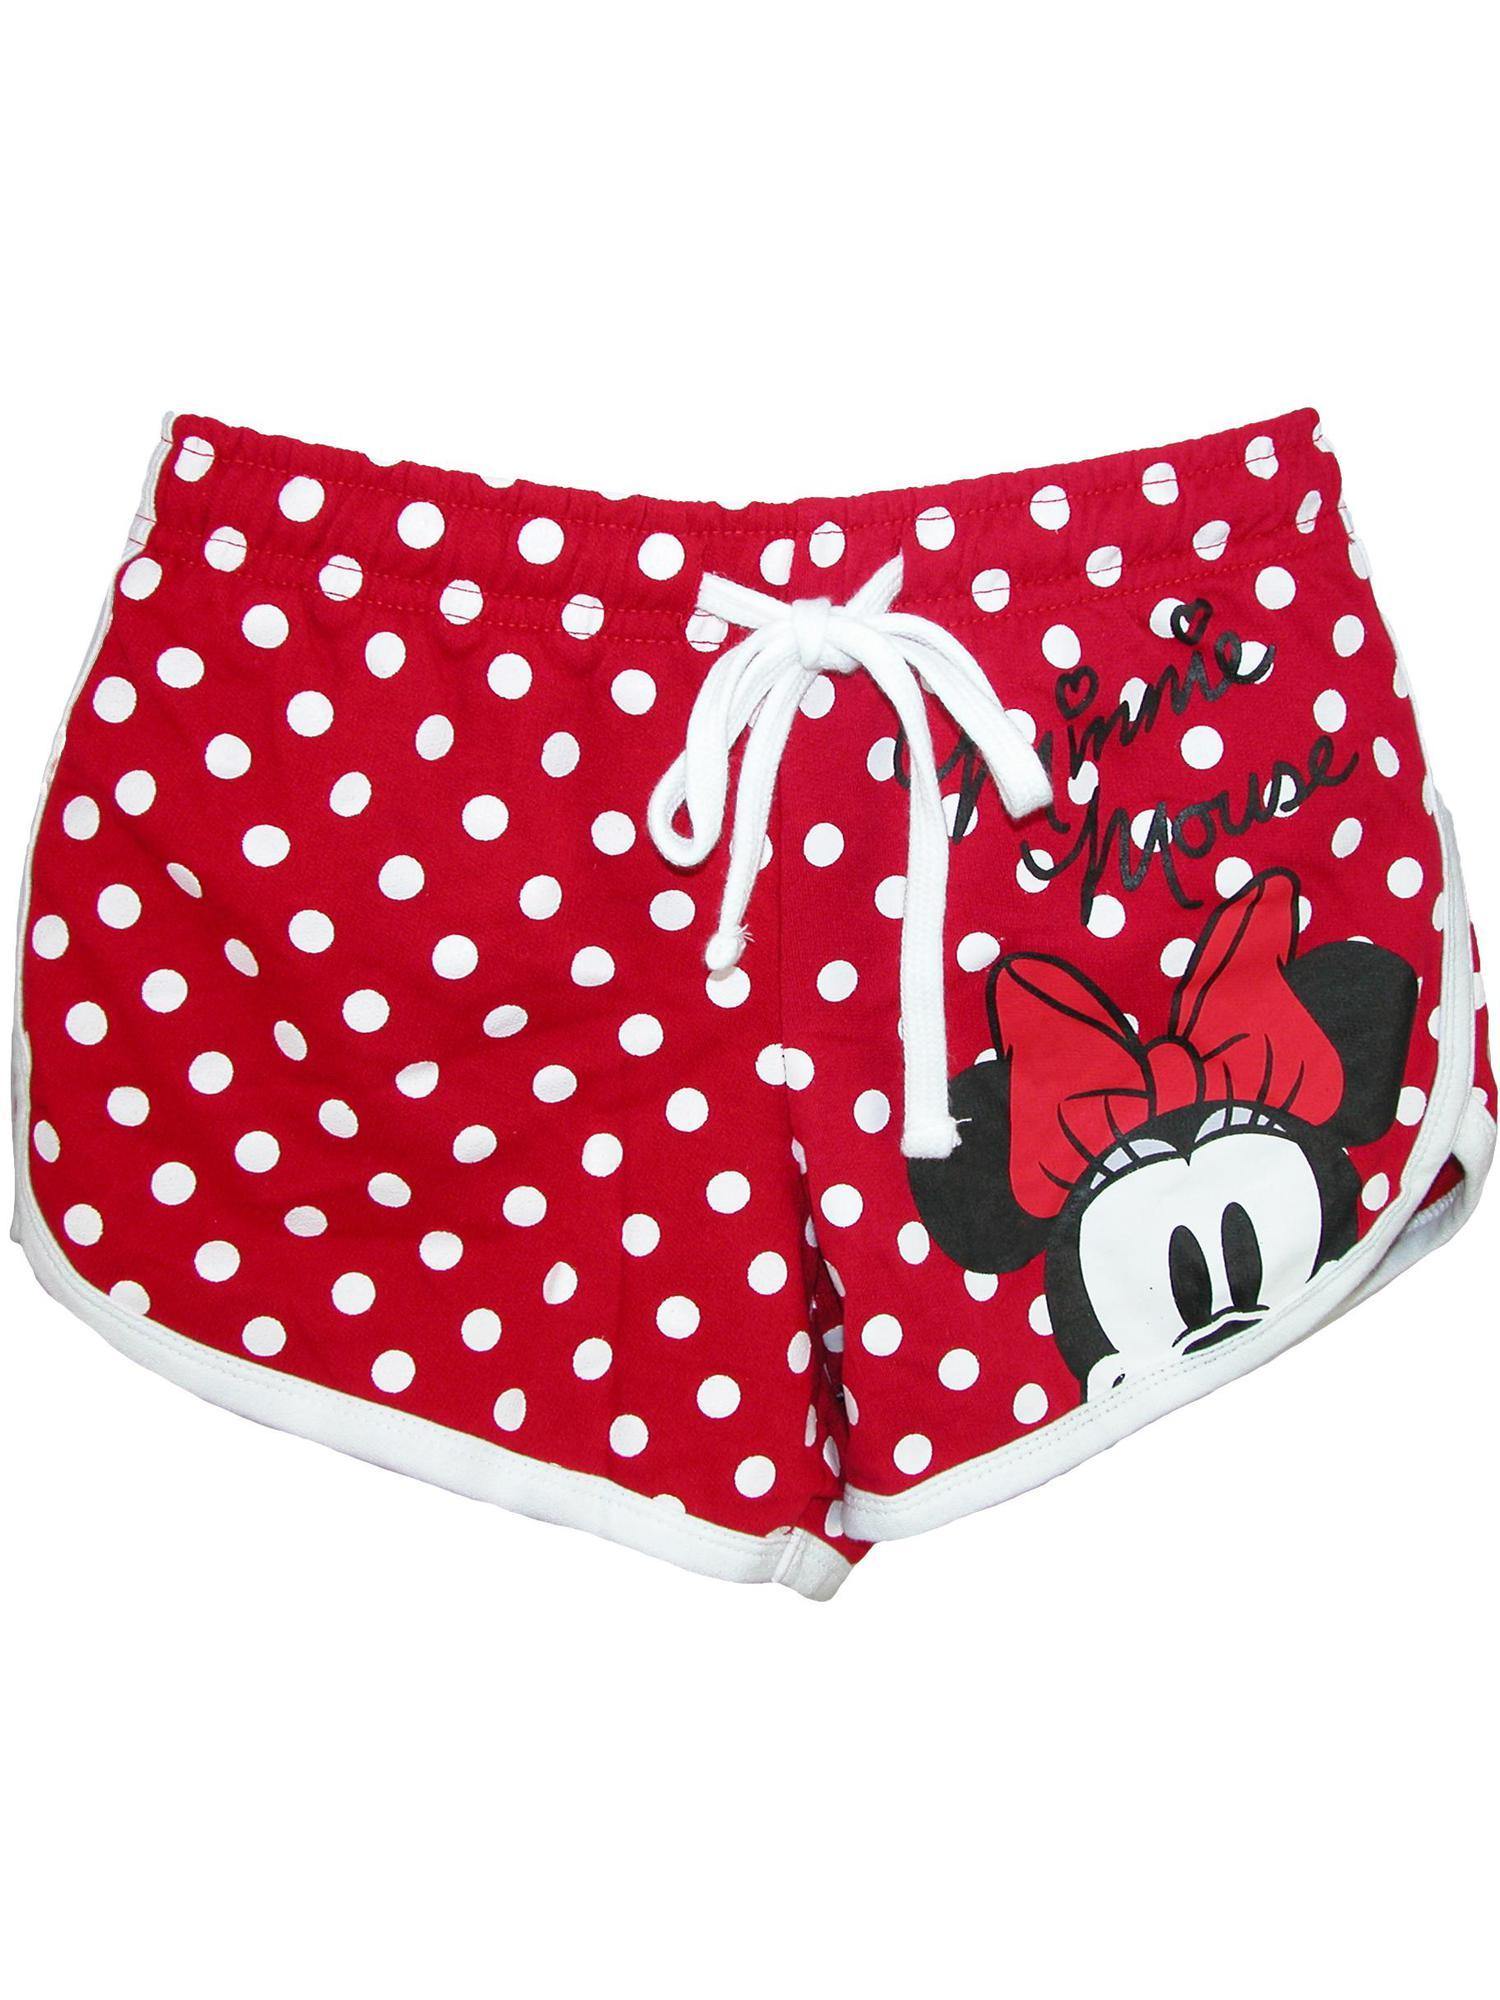 Disney Girls Minnie Mouse Peeking Red Polka Dot